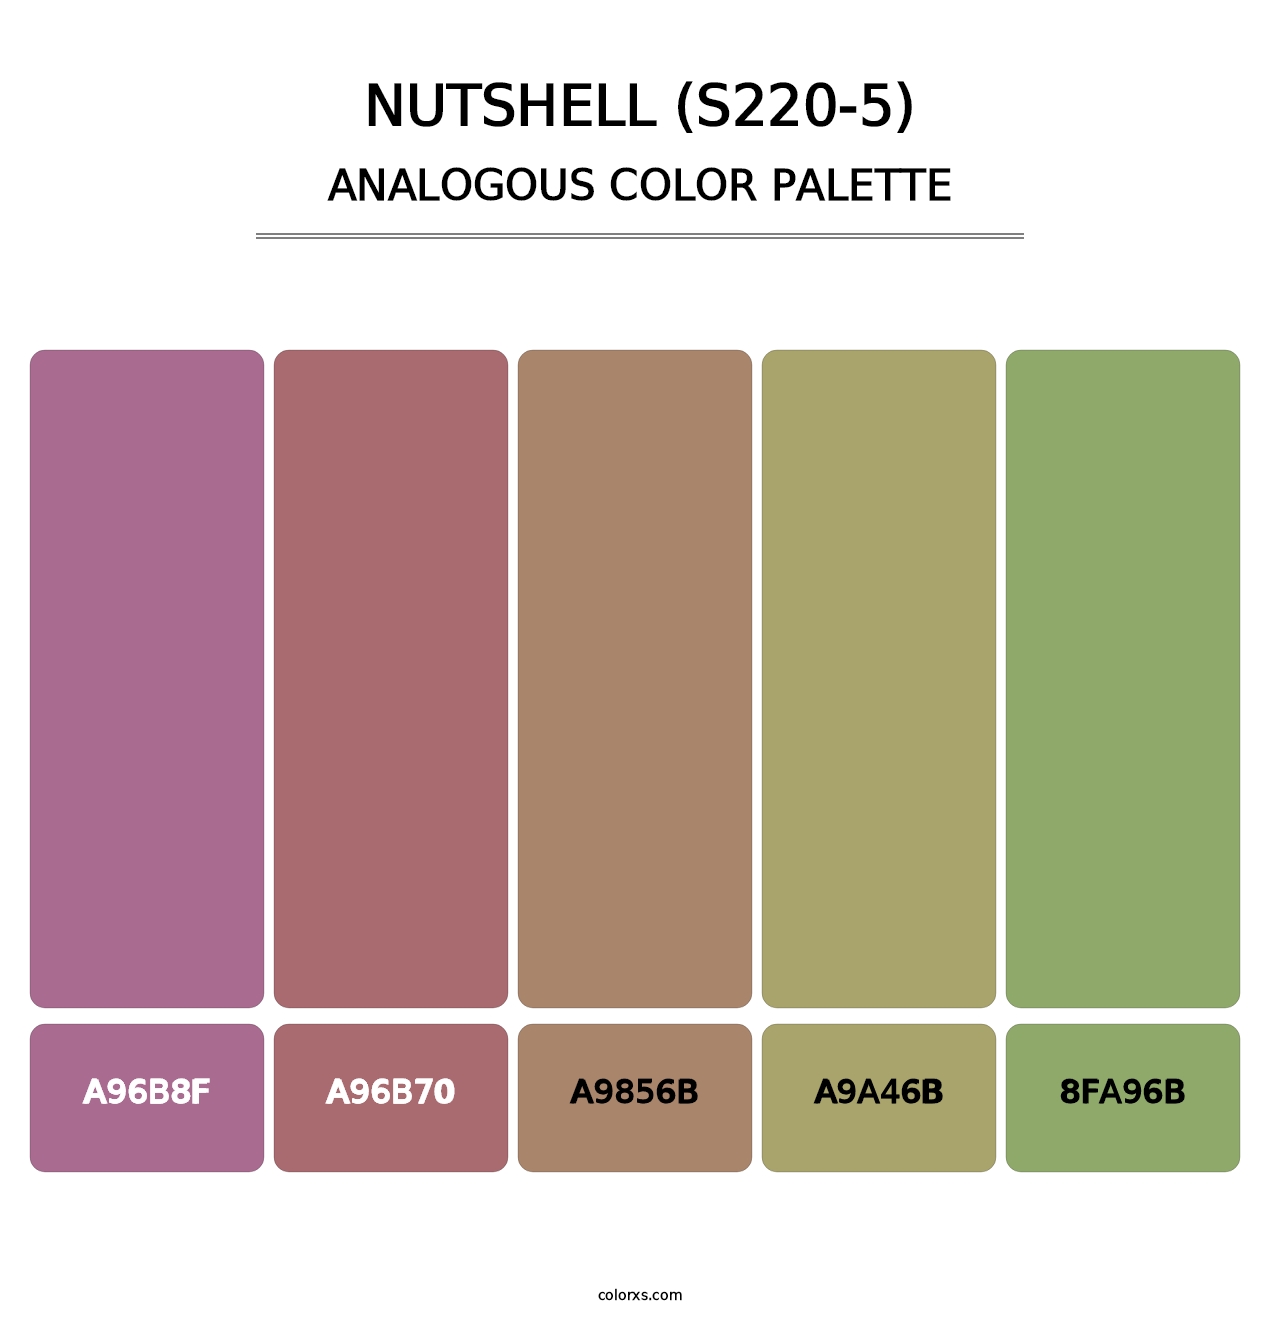 Nutshell (S220-5) - Analogous Color Palette